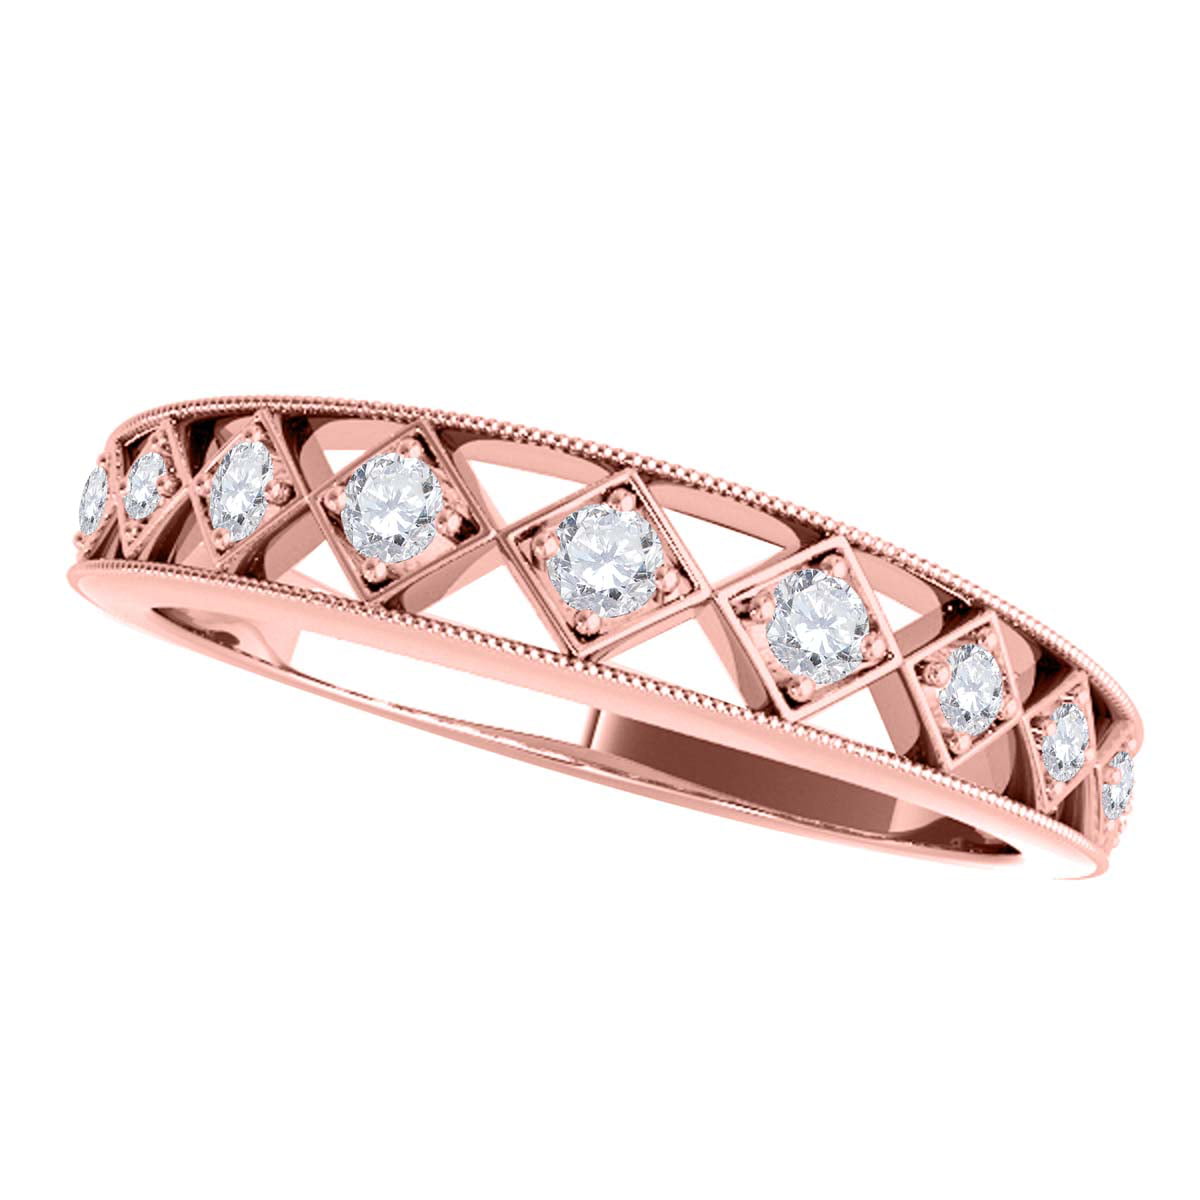 14k Rose Gold Solid Ladies Pave GenuineDiamond Fashion Wedding Band Ring 0.10 Ct 